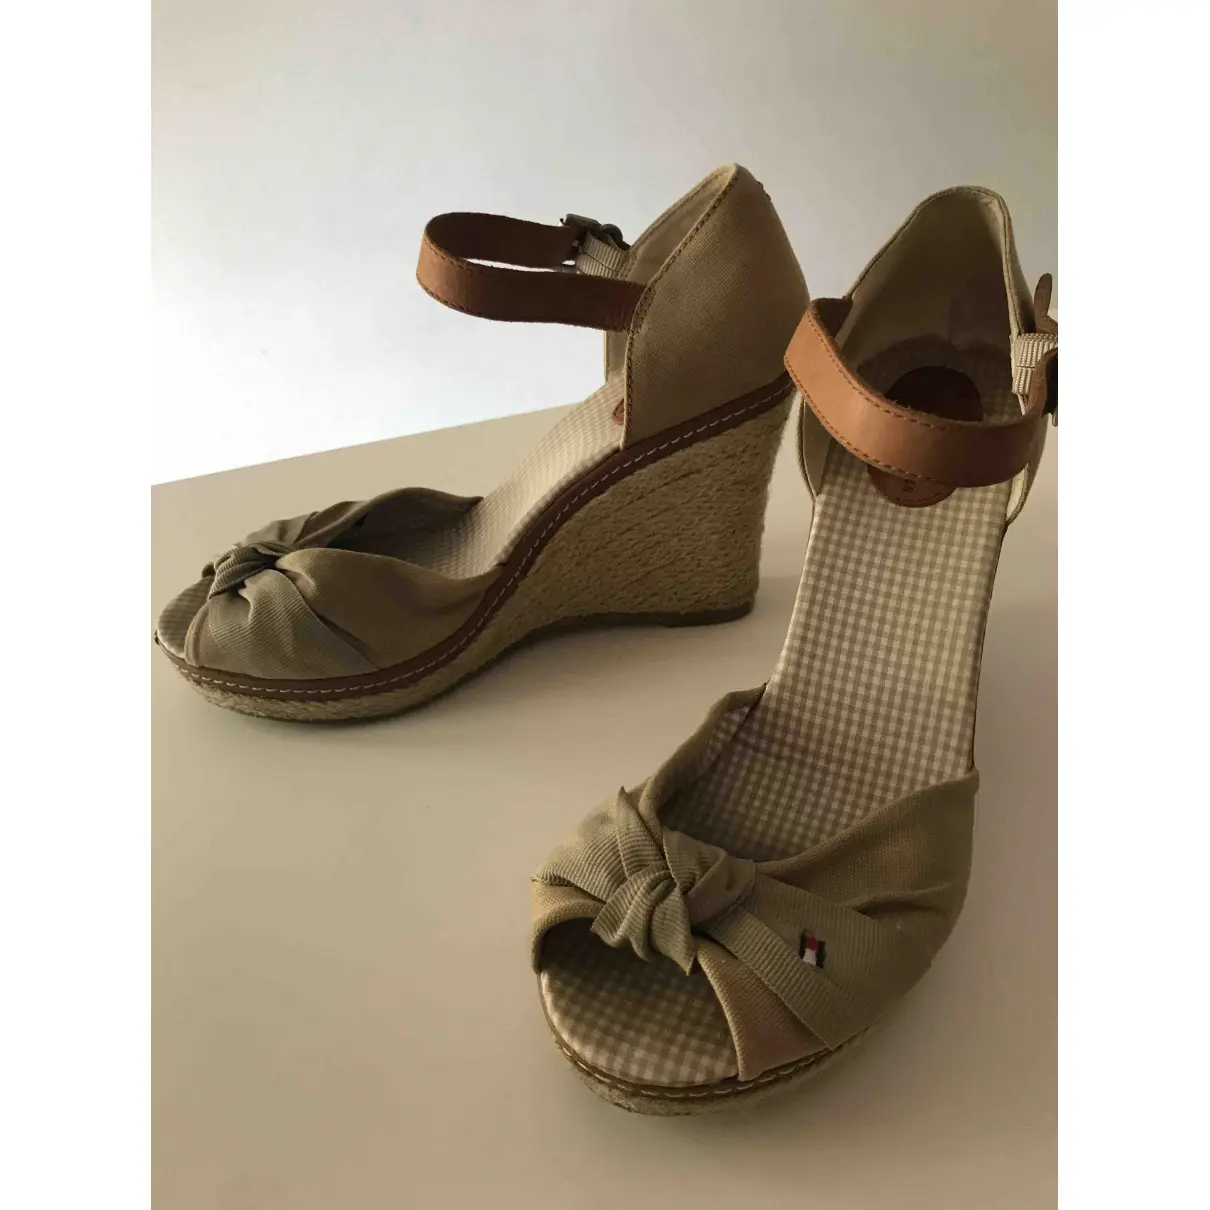 Buy Tommy Hilfiger Cloth sandals online